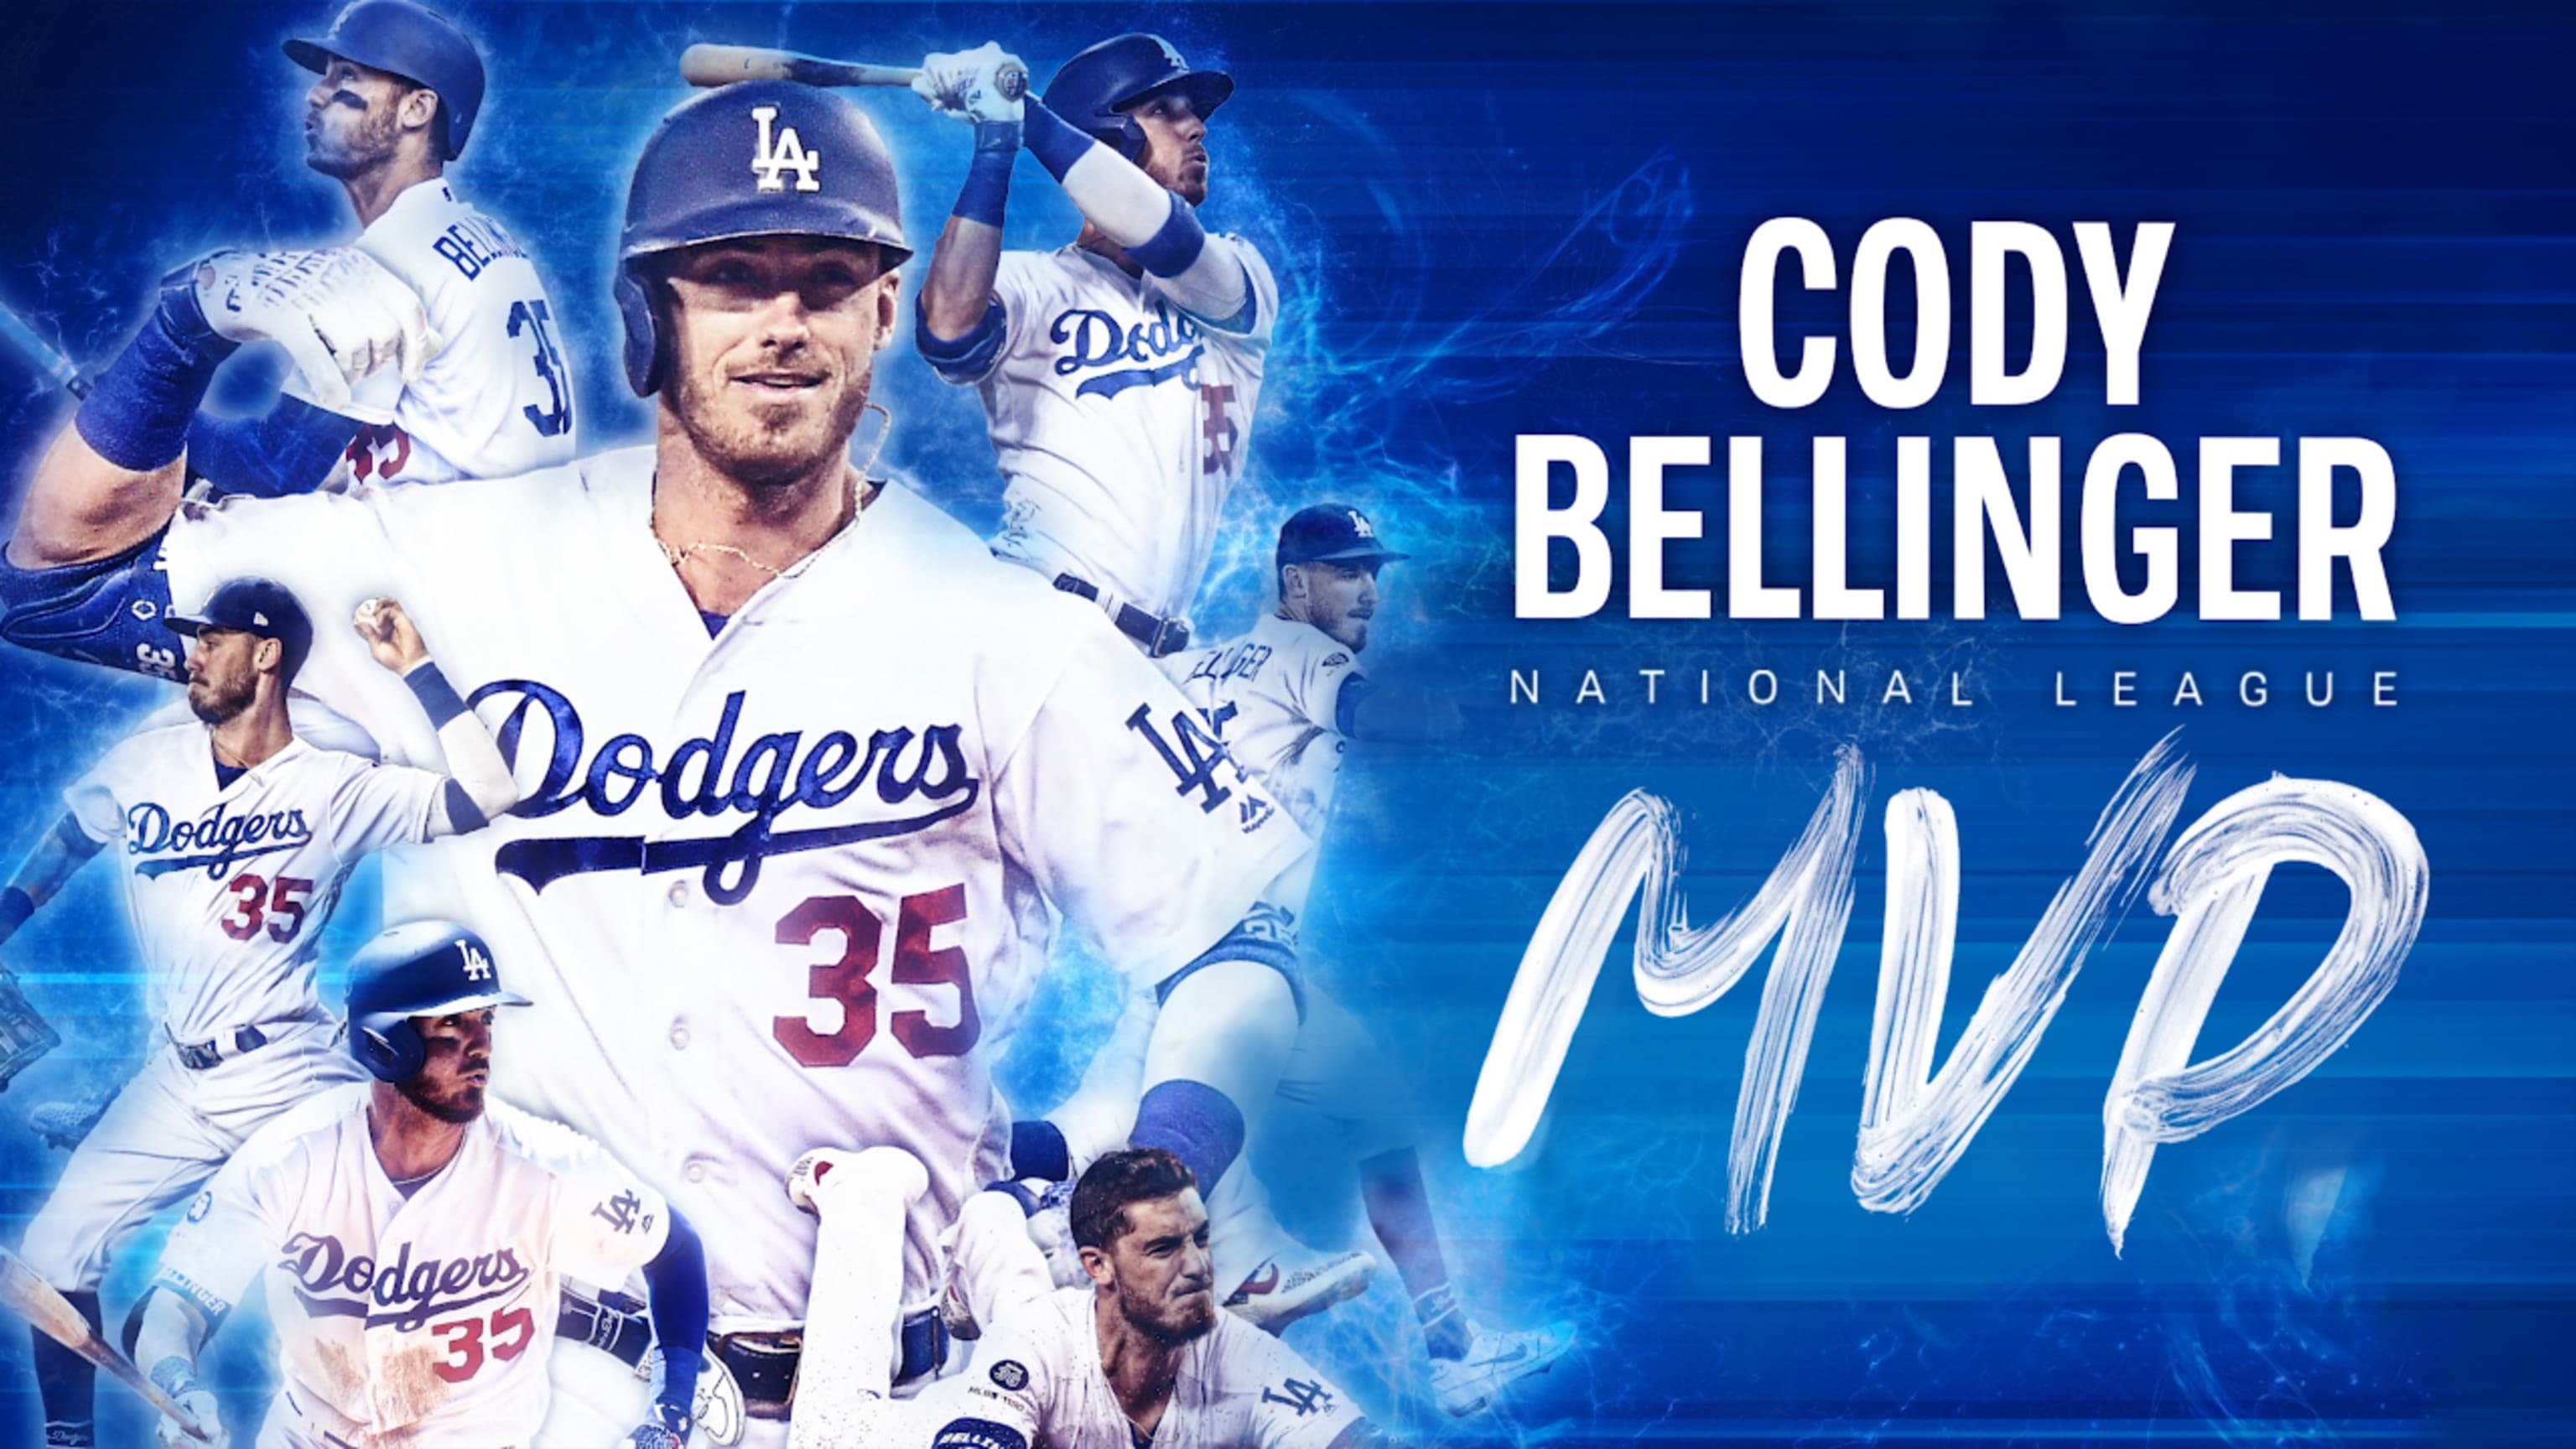 Dodgers News: Cody Bellinger Named Gold Glove Award Finalist